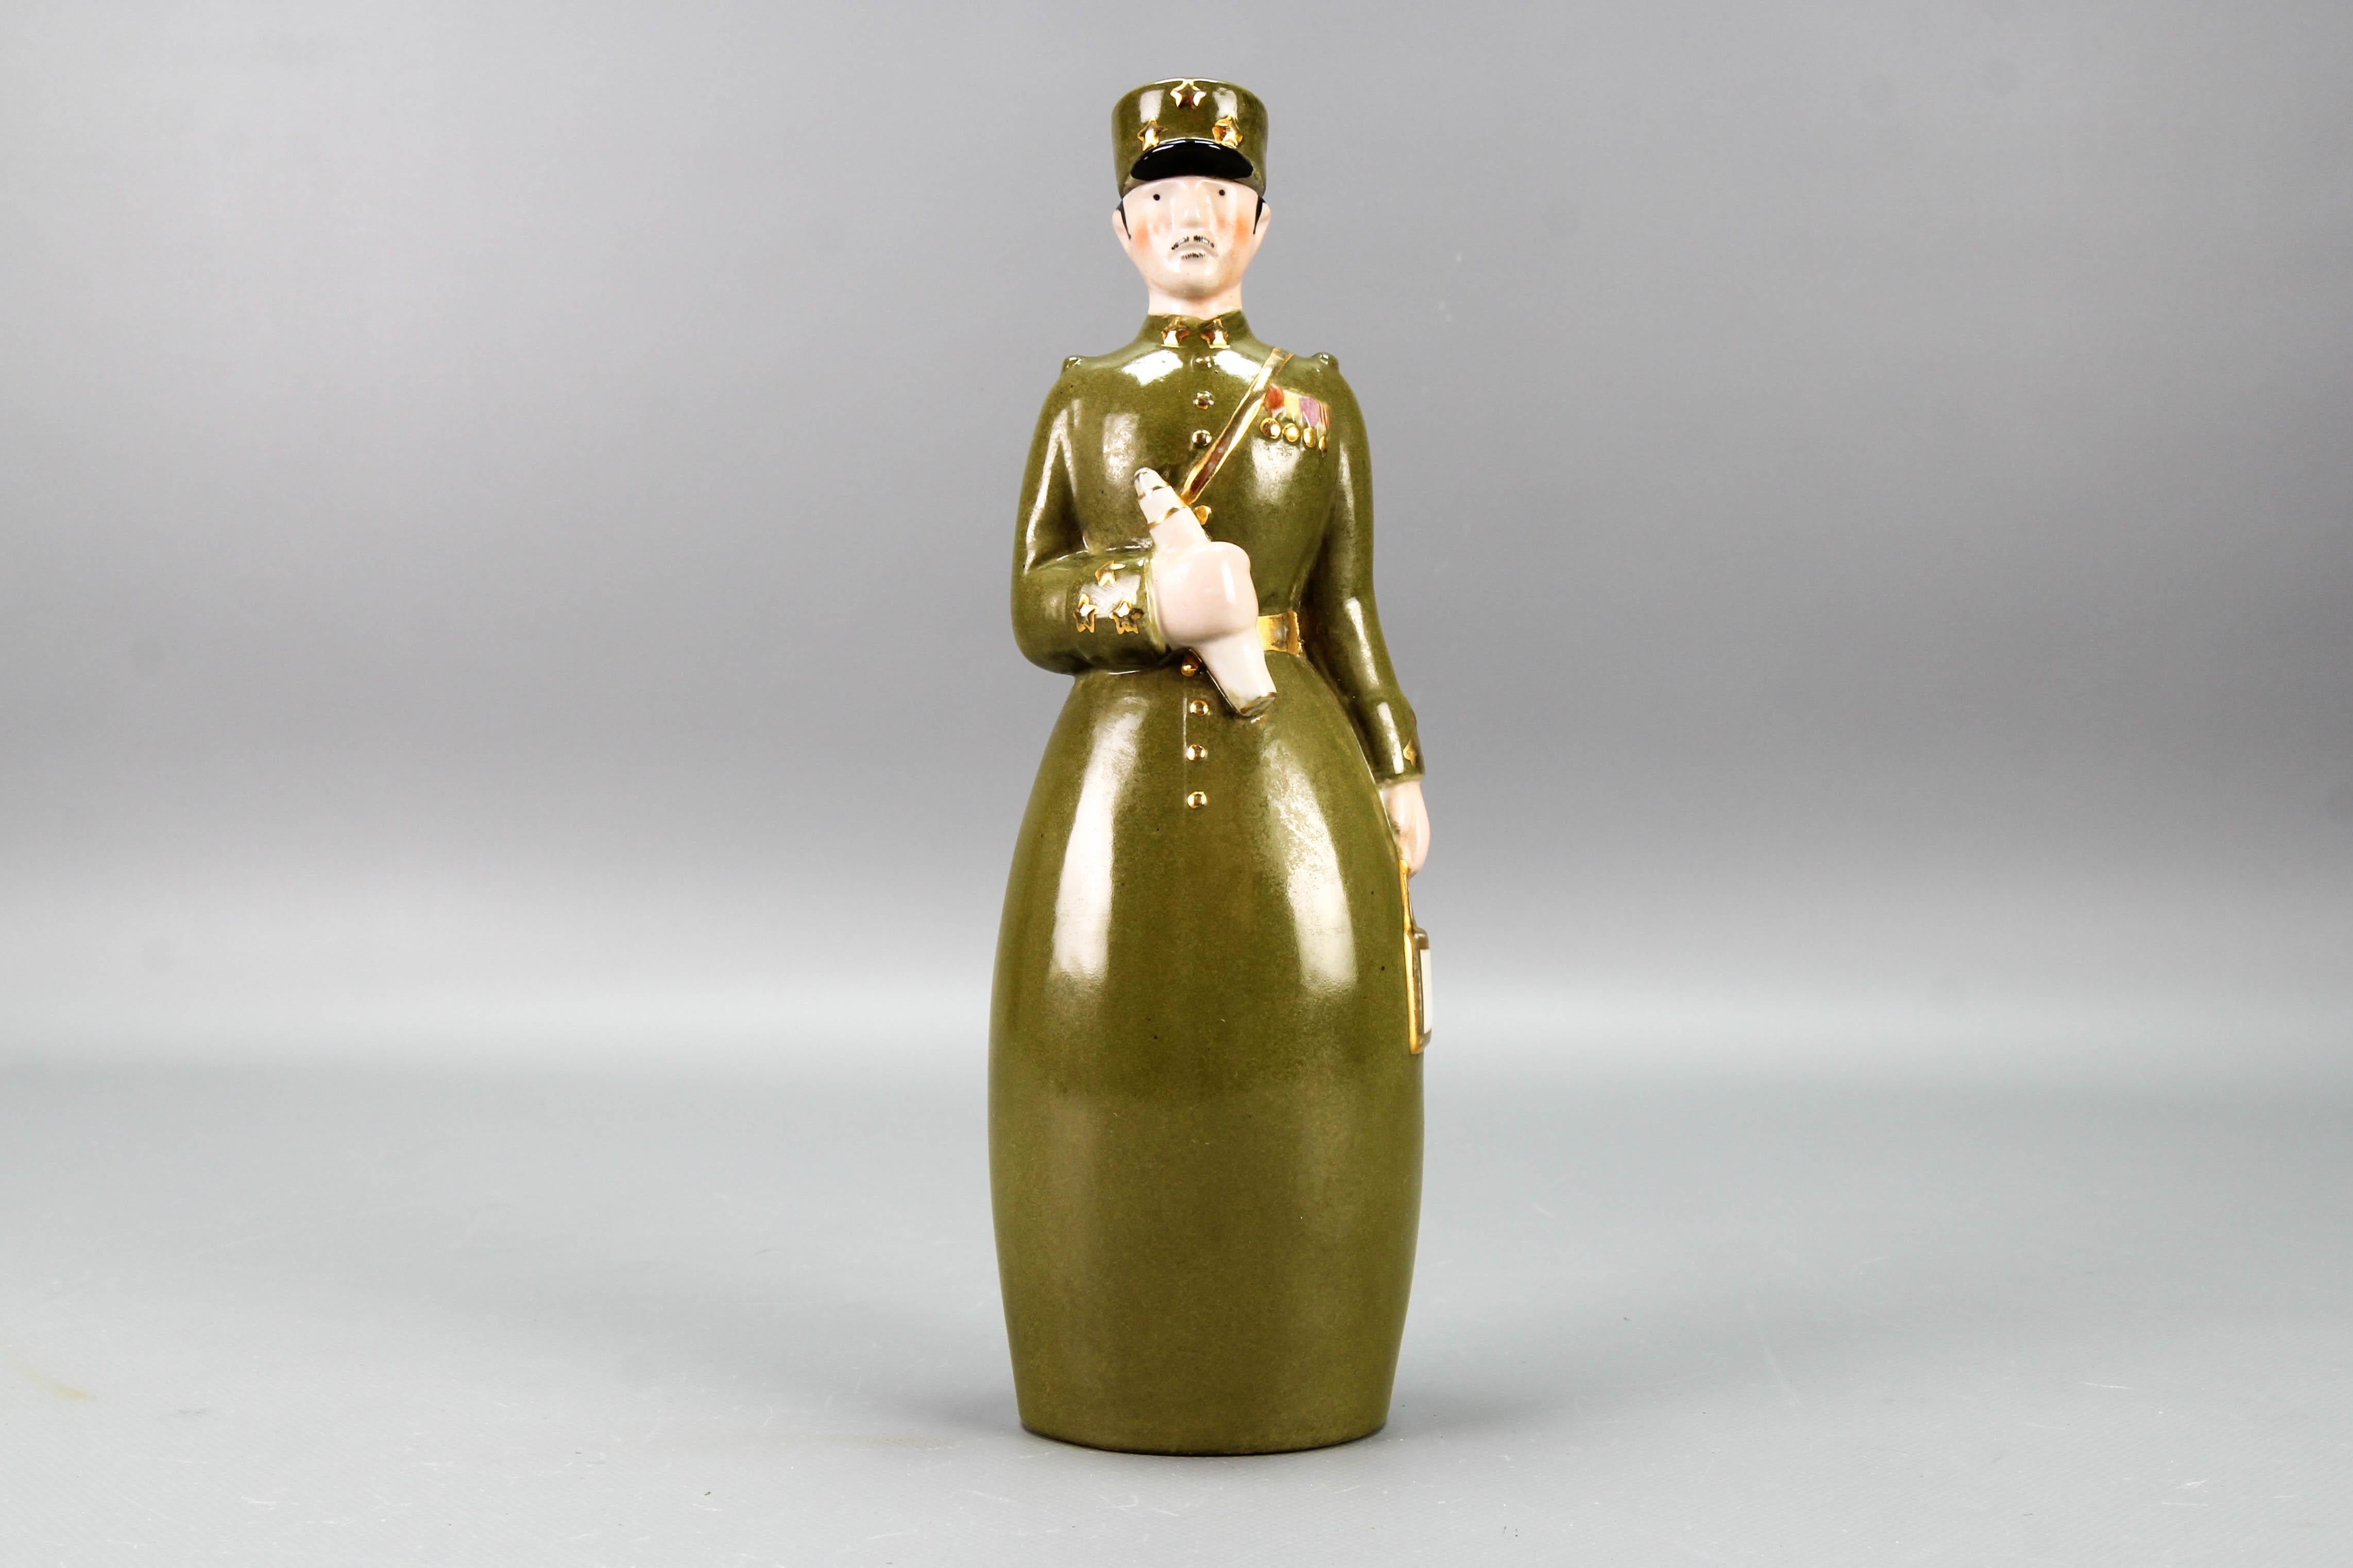  French Art Deco Ceramic Figural Bottle Brigadier General by Robj Paris, 1920s 15